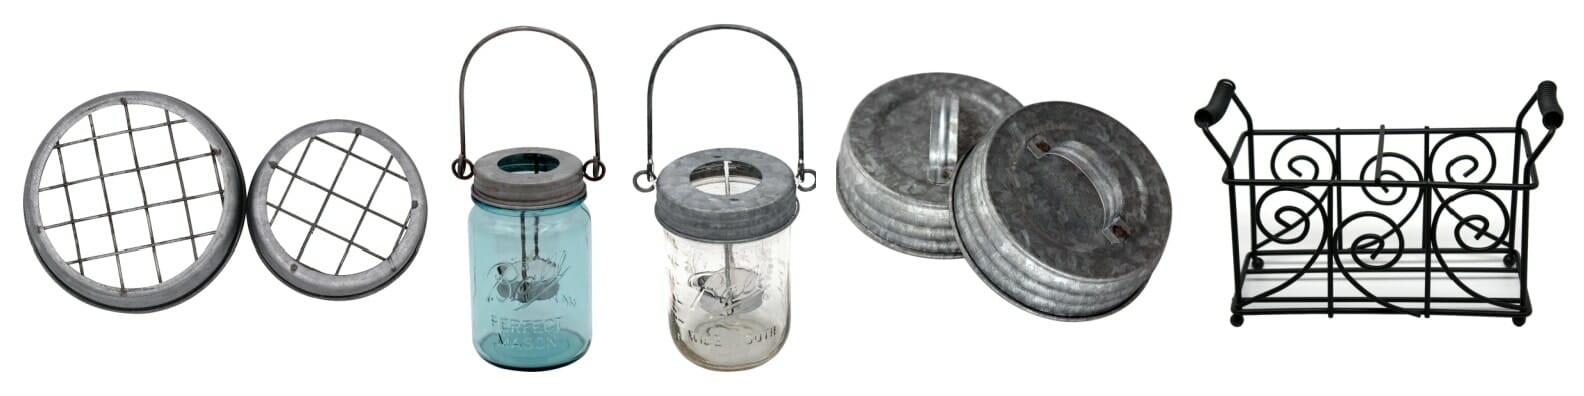 mason-jar-lifestyle-DIY-spa-day-with-mason-jar-accessories-lids-galvanized-frog-flower-tea-light-holder-handle-decorative-lid-spiral-caddy